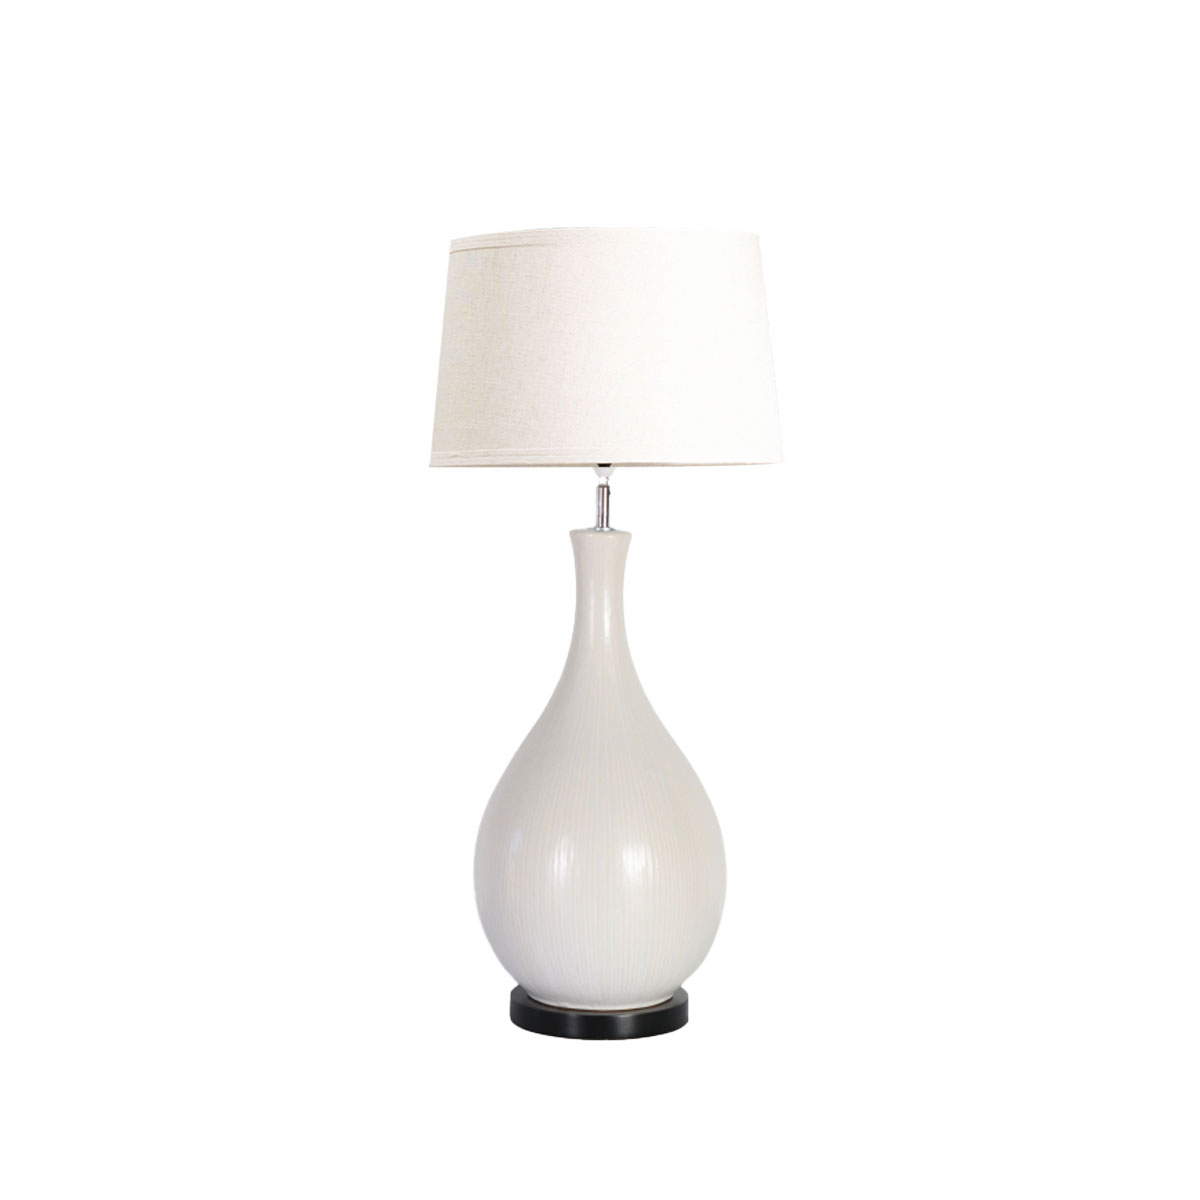 white ceramic lamp base